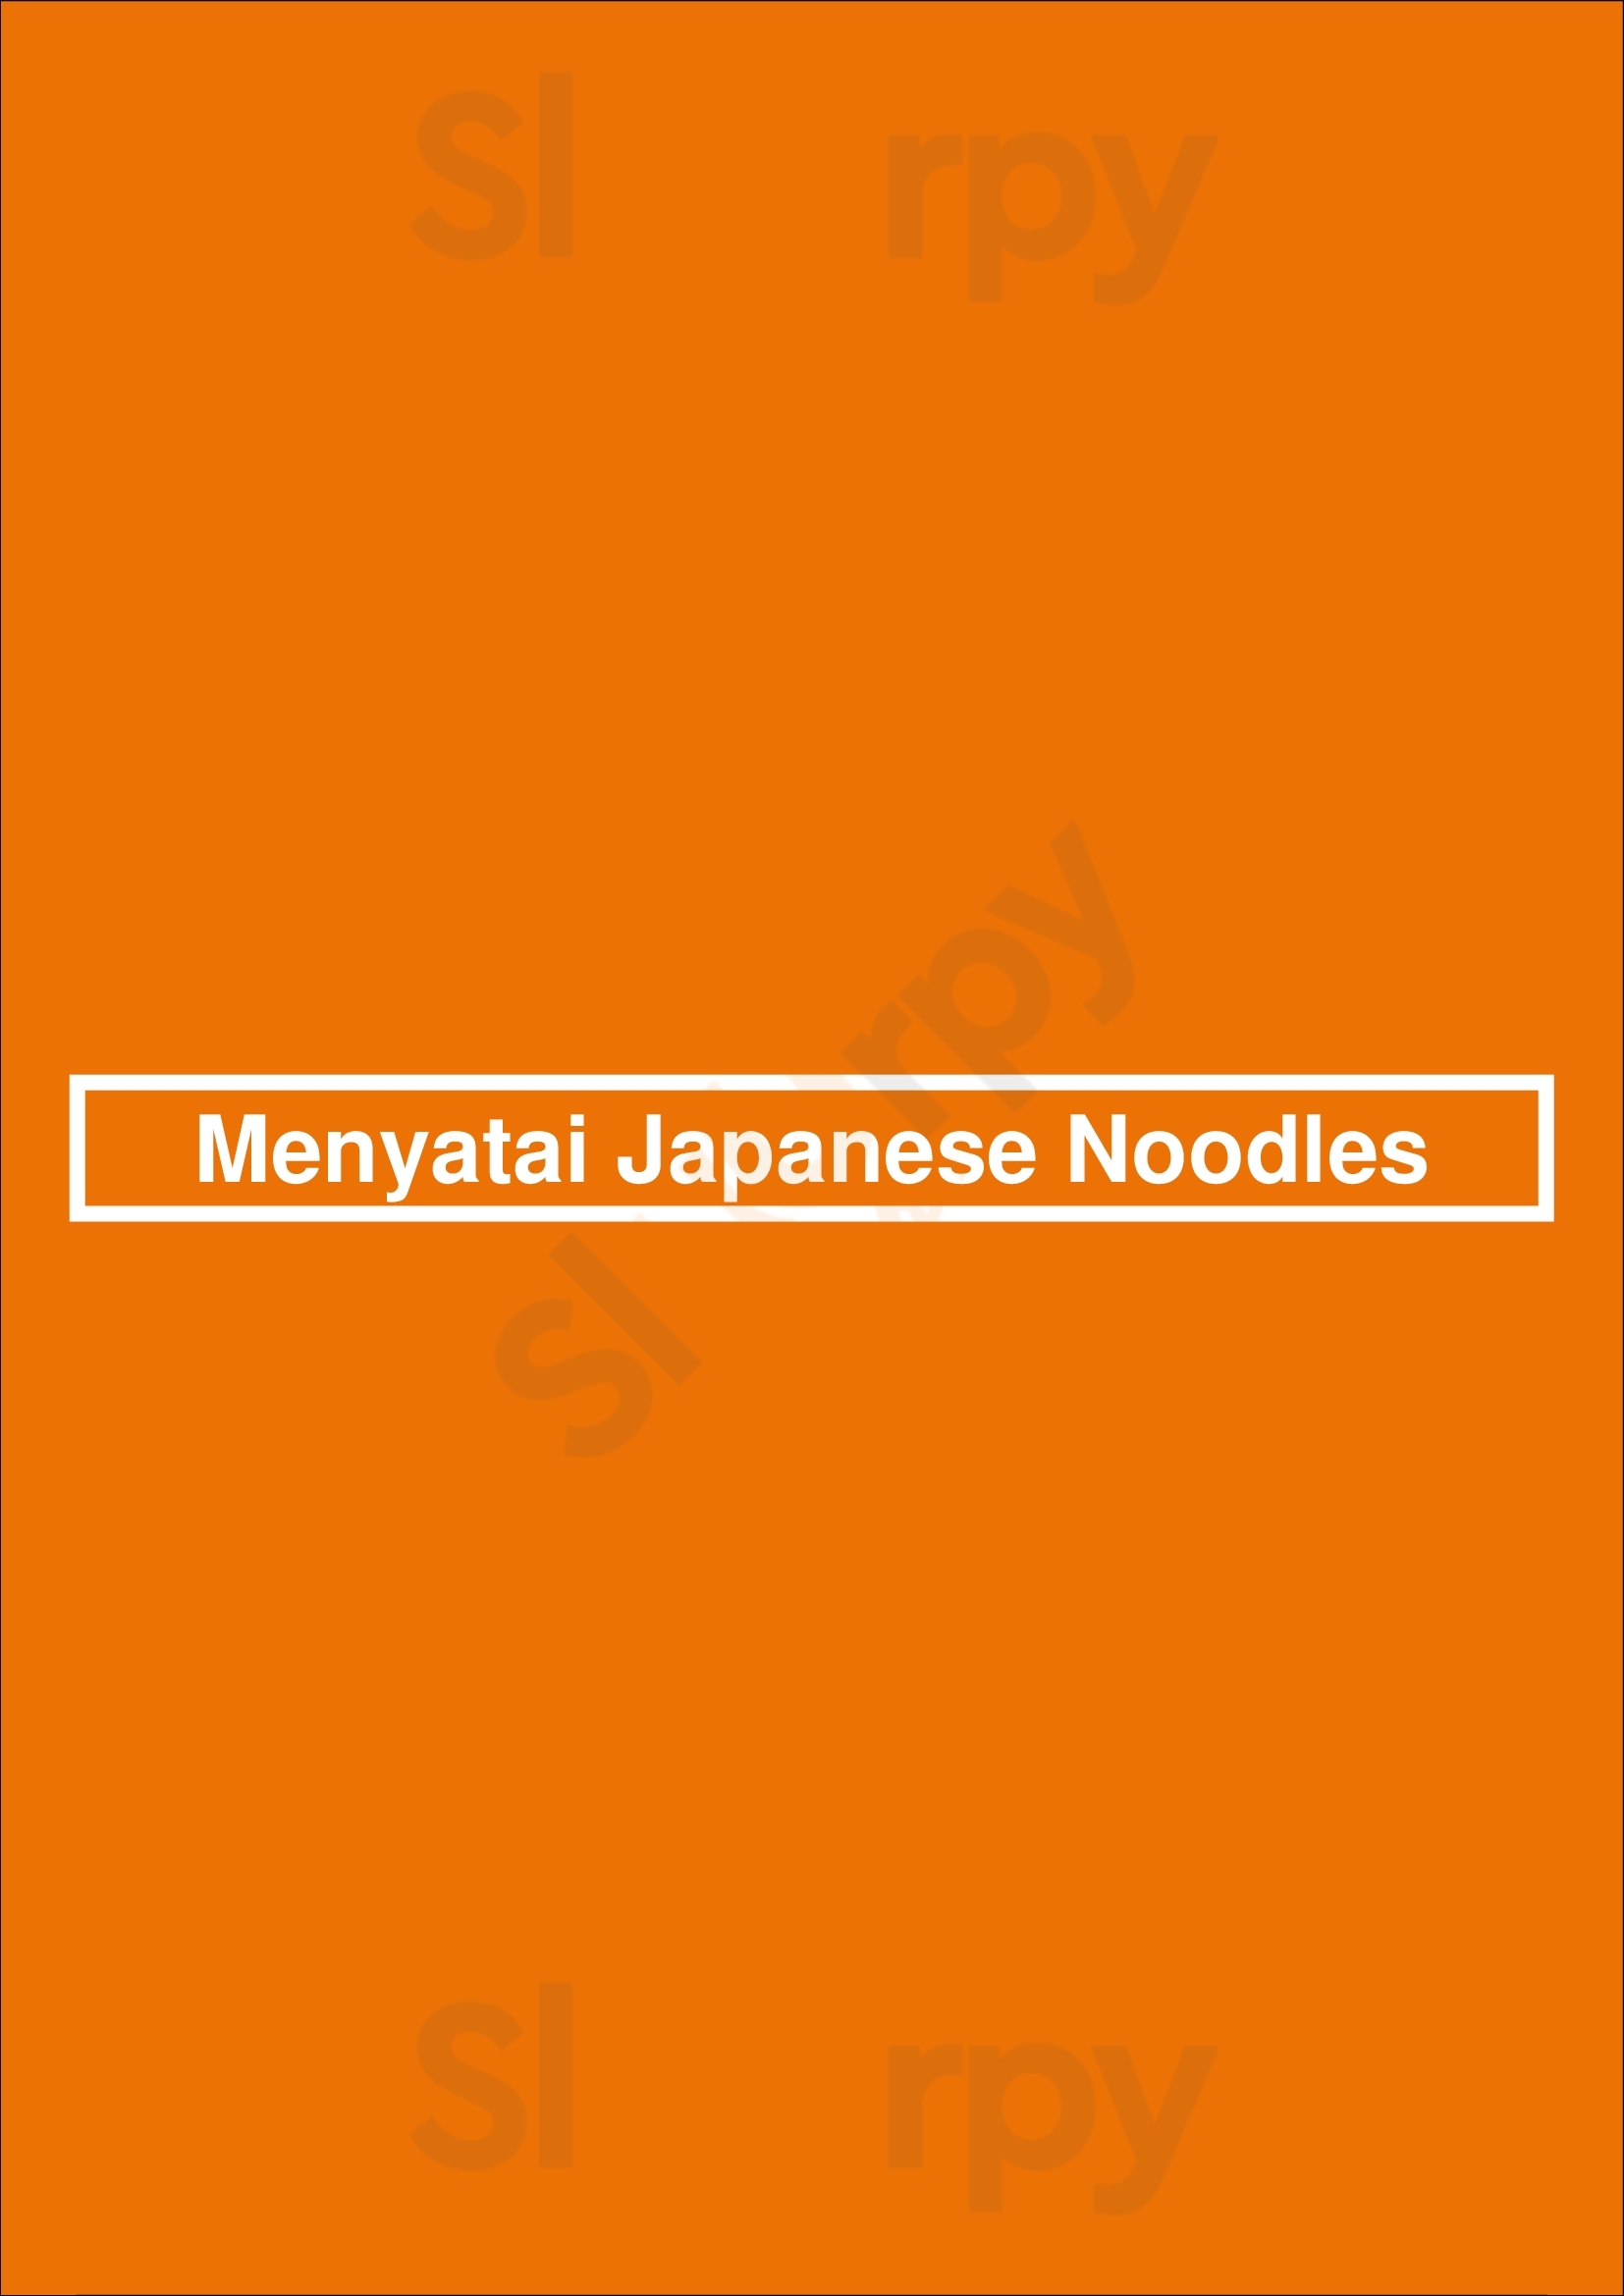 Menyatai Japanese Noodles Calgary Menu - 1